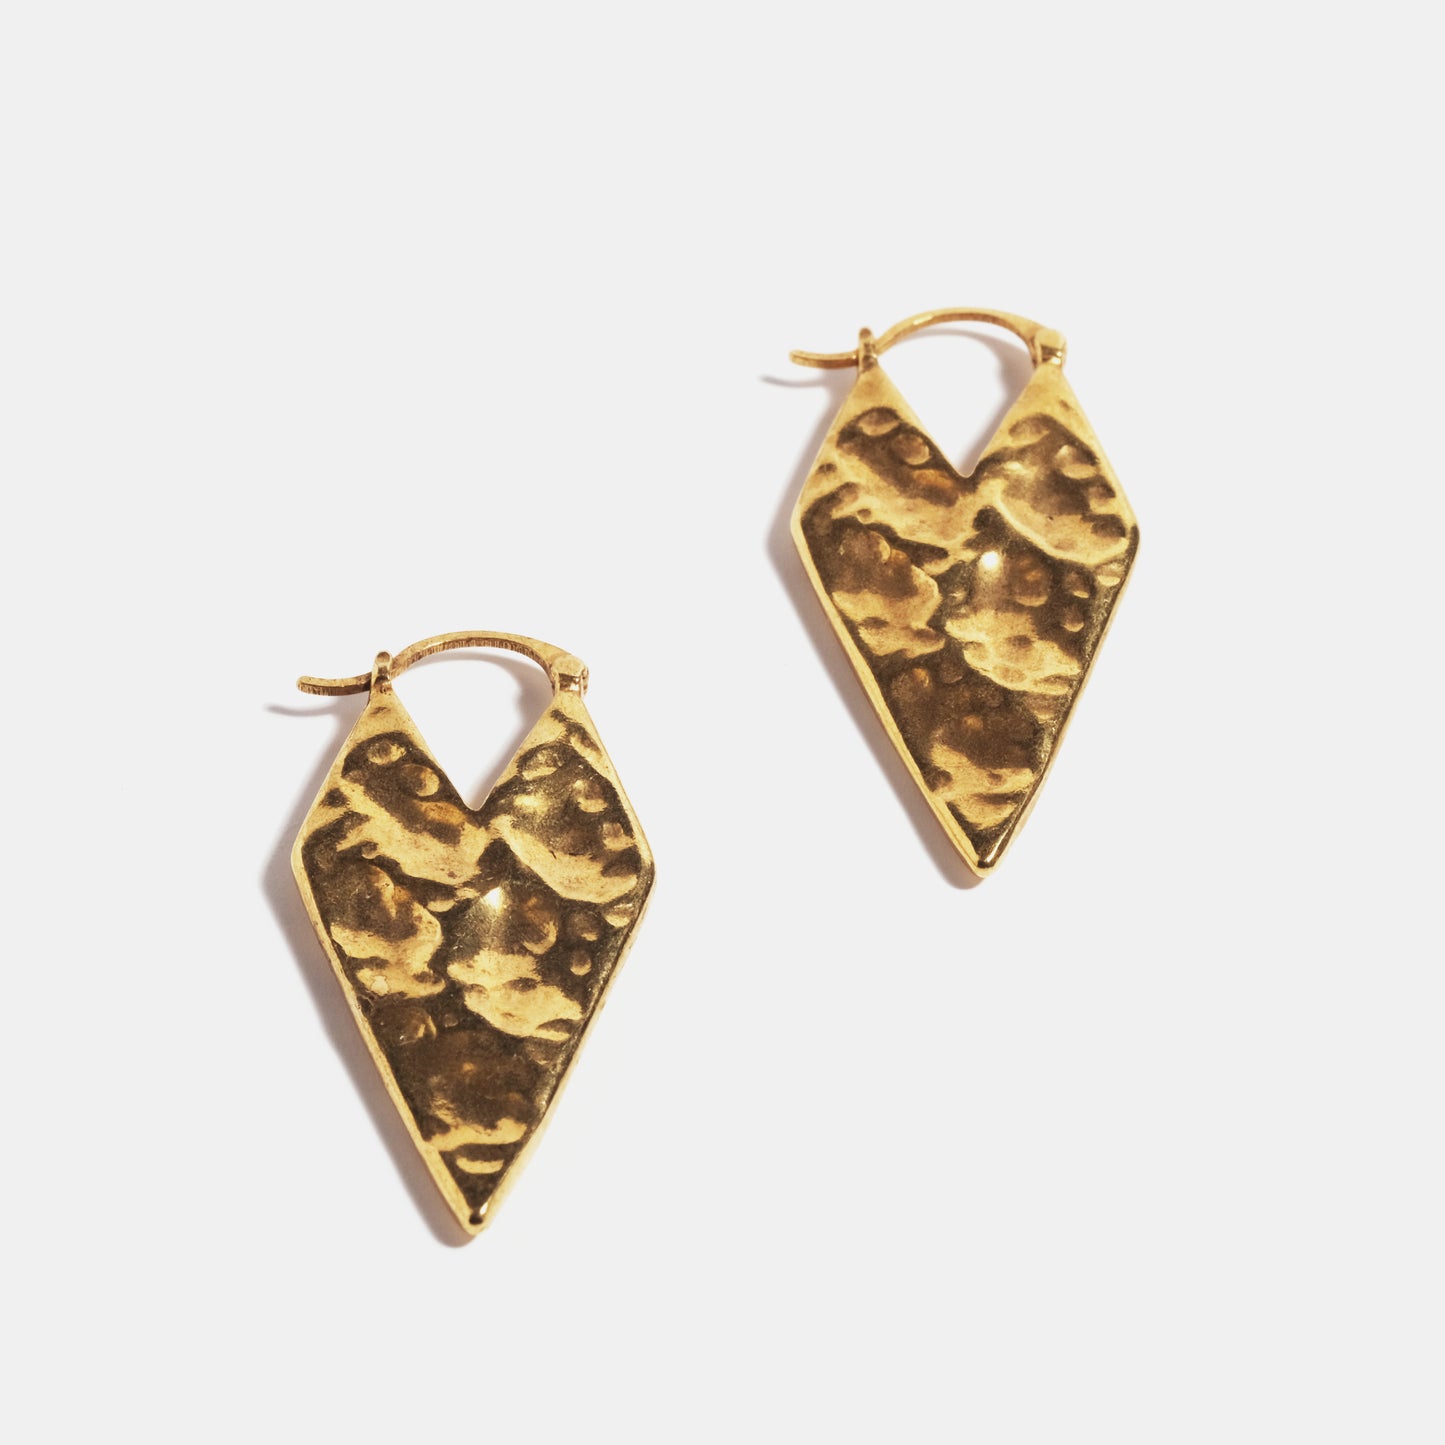 "Queen of hearts" earrings